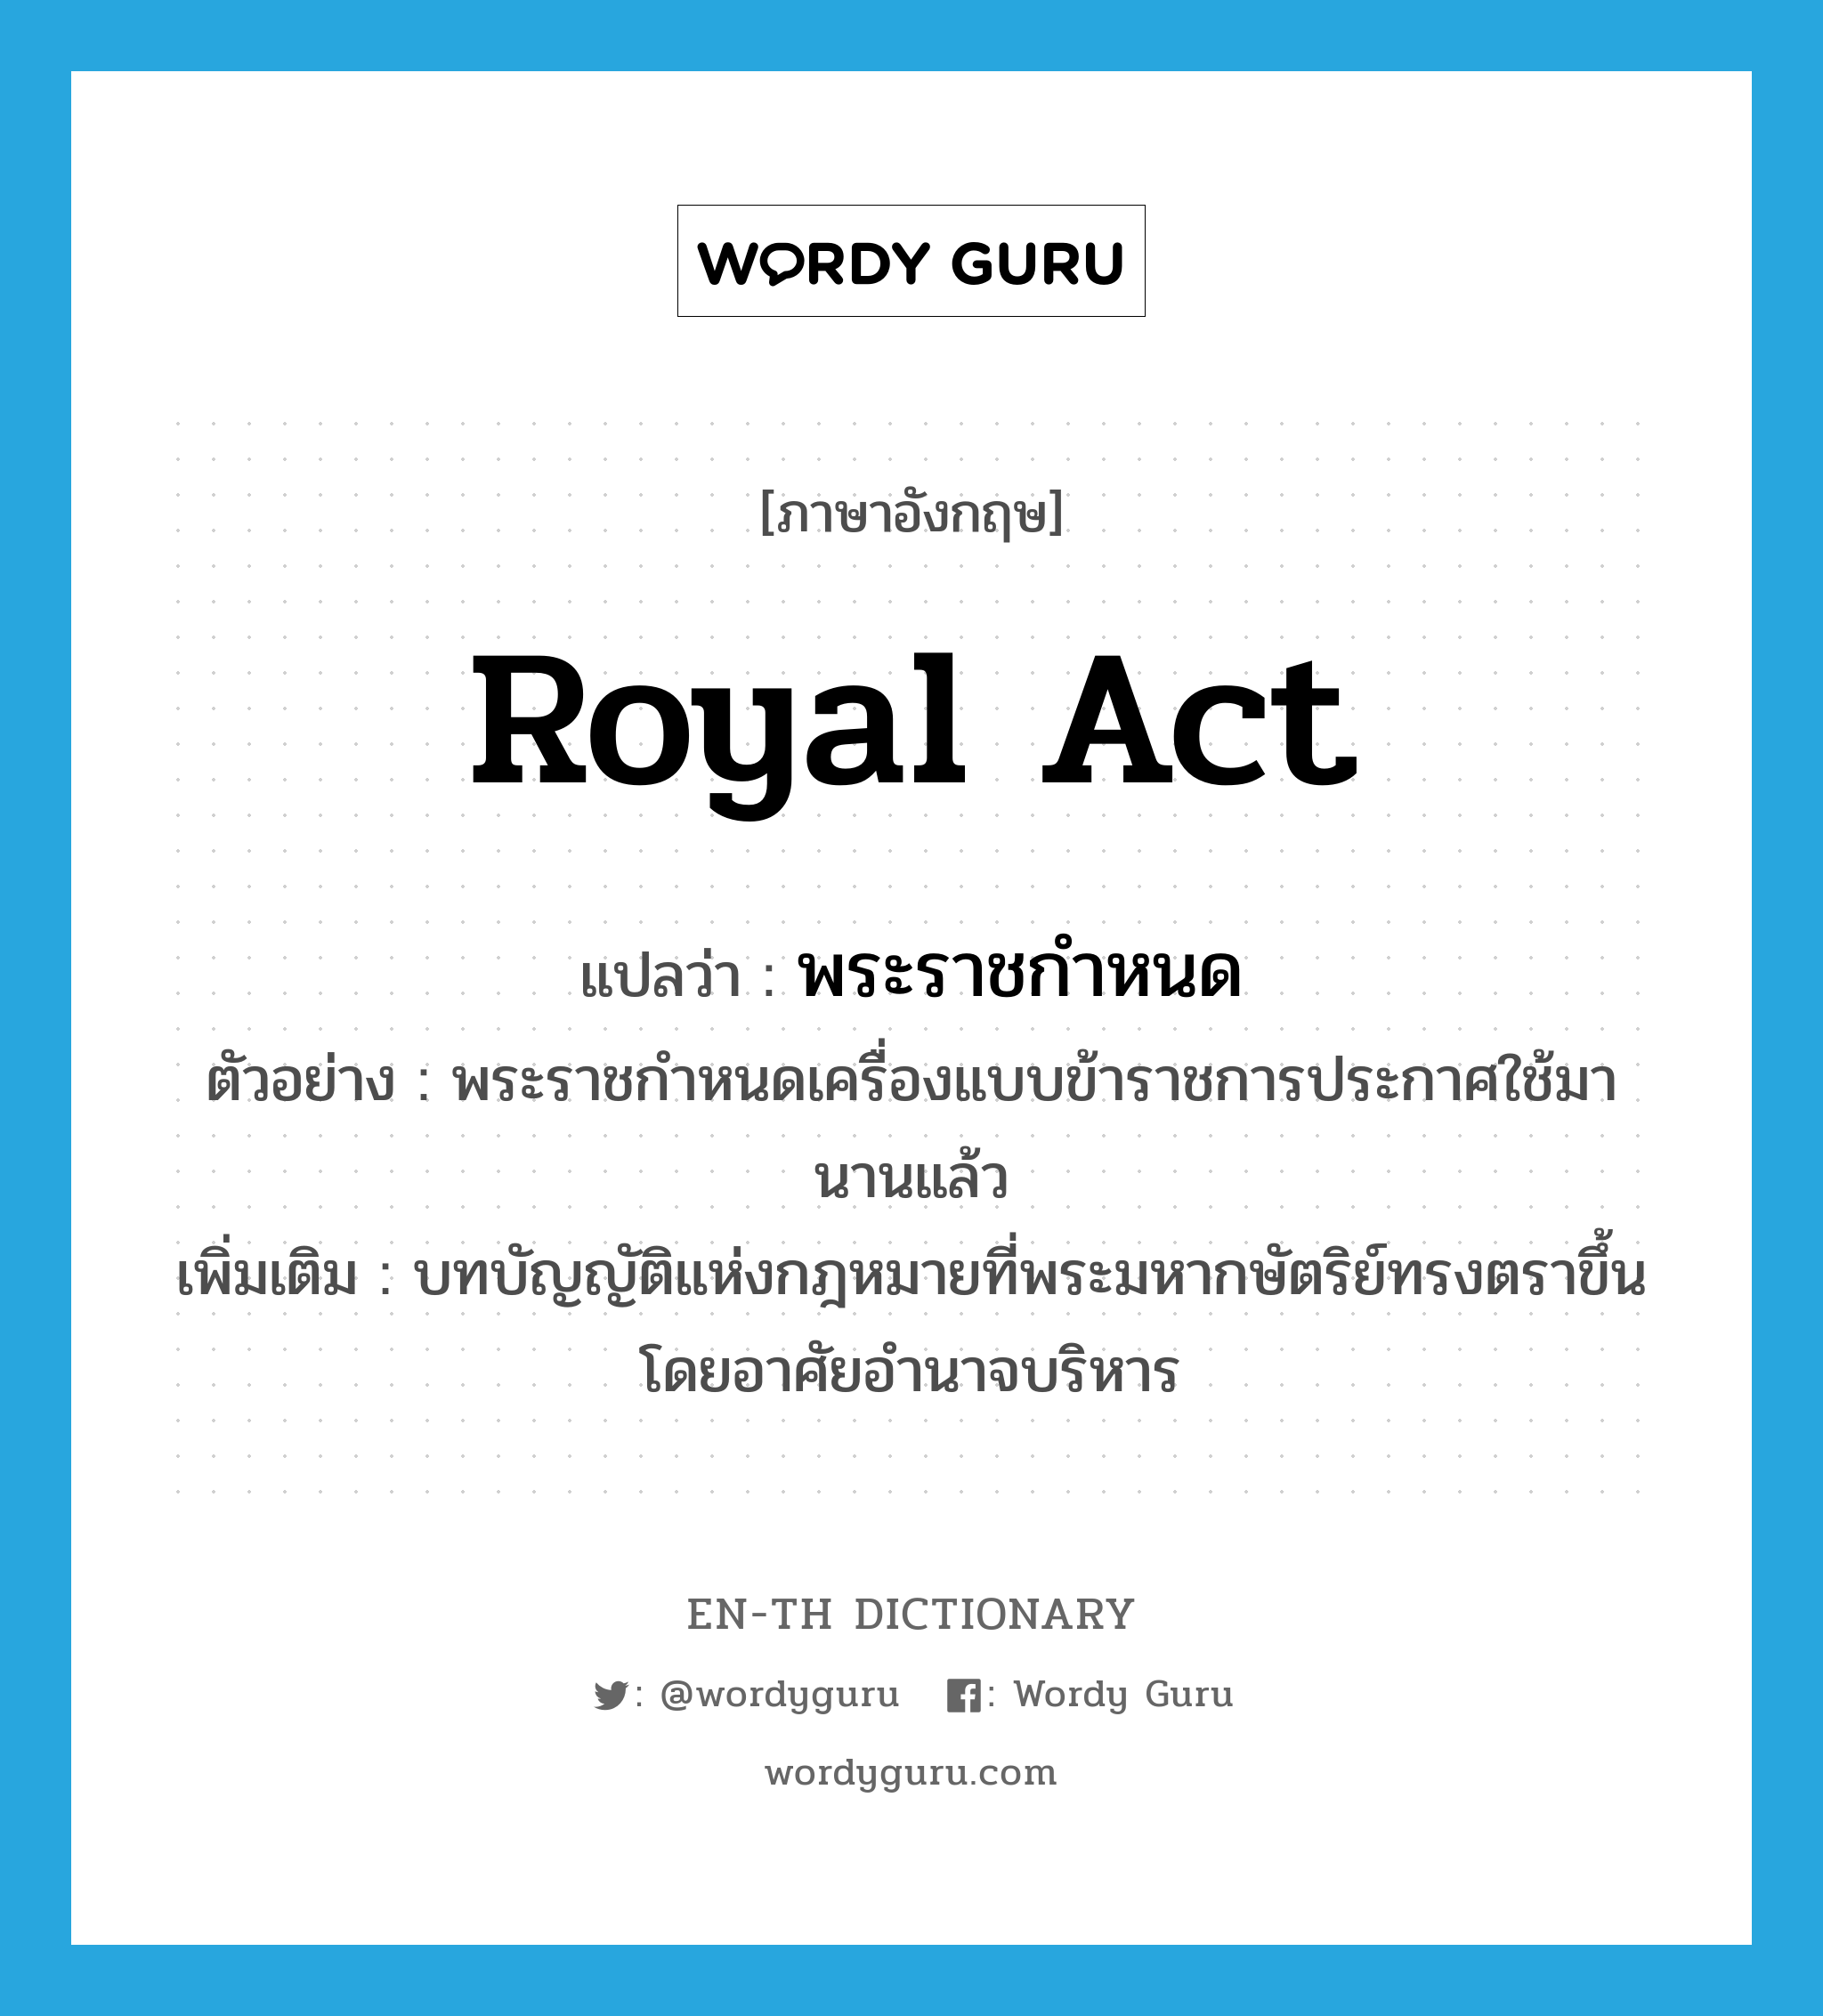 royal act แปลว่า?, คำศัพท์ภาษาอังกฤษ royal act แปลว่า พระราชกำหนด ประเภท N ตัวอย่าง พระราชกำหนดเครื่องแบบข้าราชการประกาศใช้มานานแล้ว เพิ่มเติม บทบัญญัติแห่งกฎหมายที่พระมหากษัตริย์ทรงตราขึ้นโดยอาศัยอำนาจบริหาร หมวด N